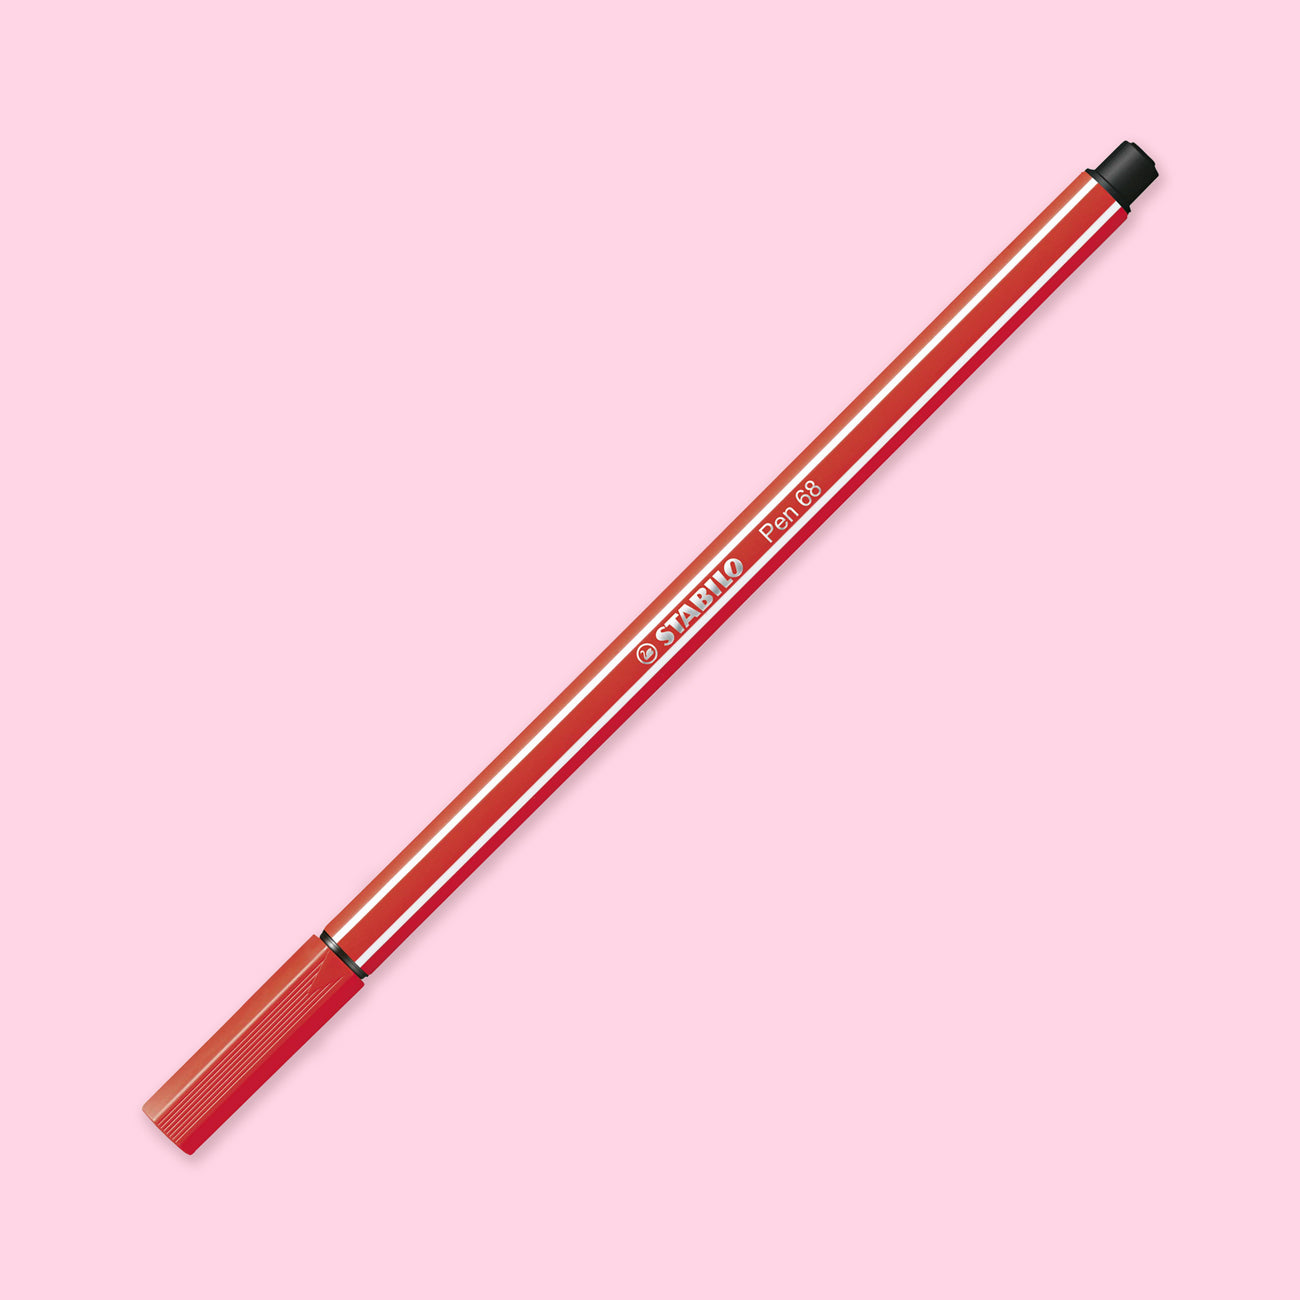 Stabilo Pen 68 Marker - 1.0 mm - 20 Color Set